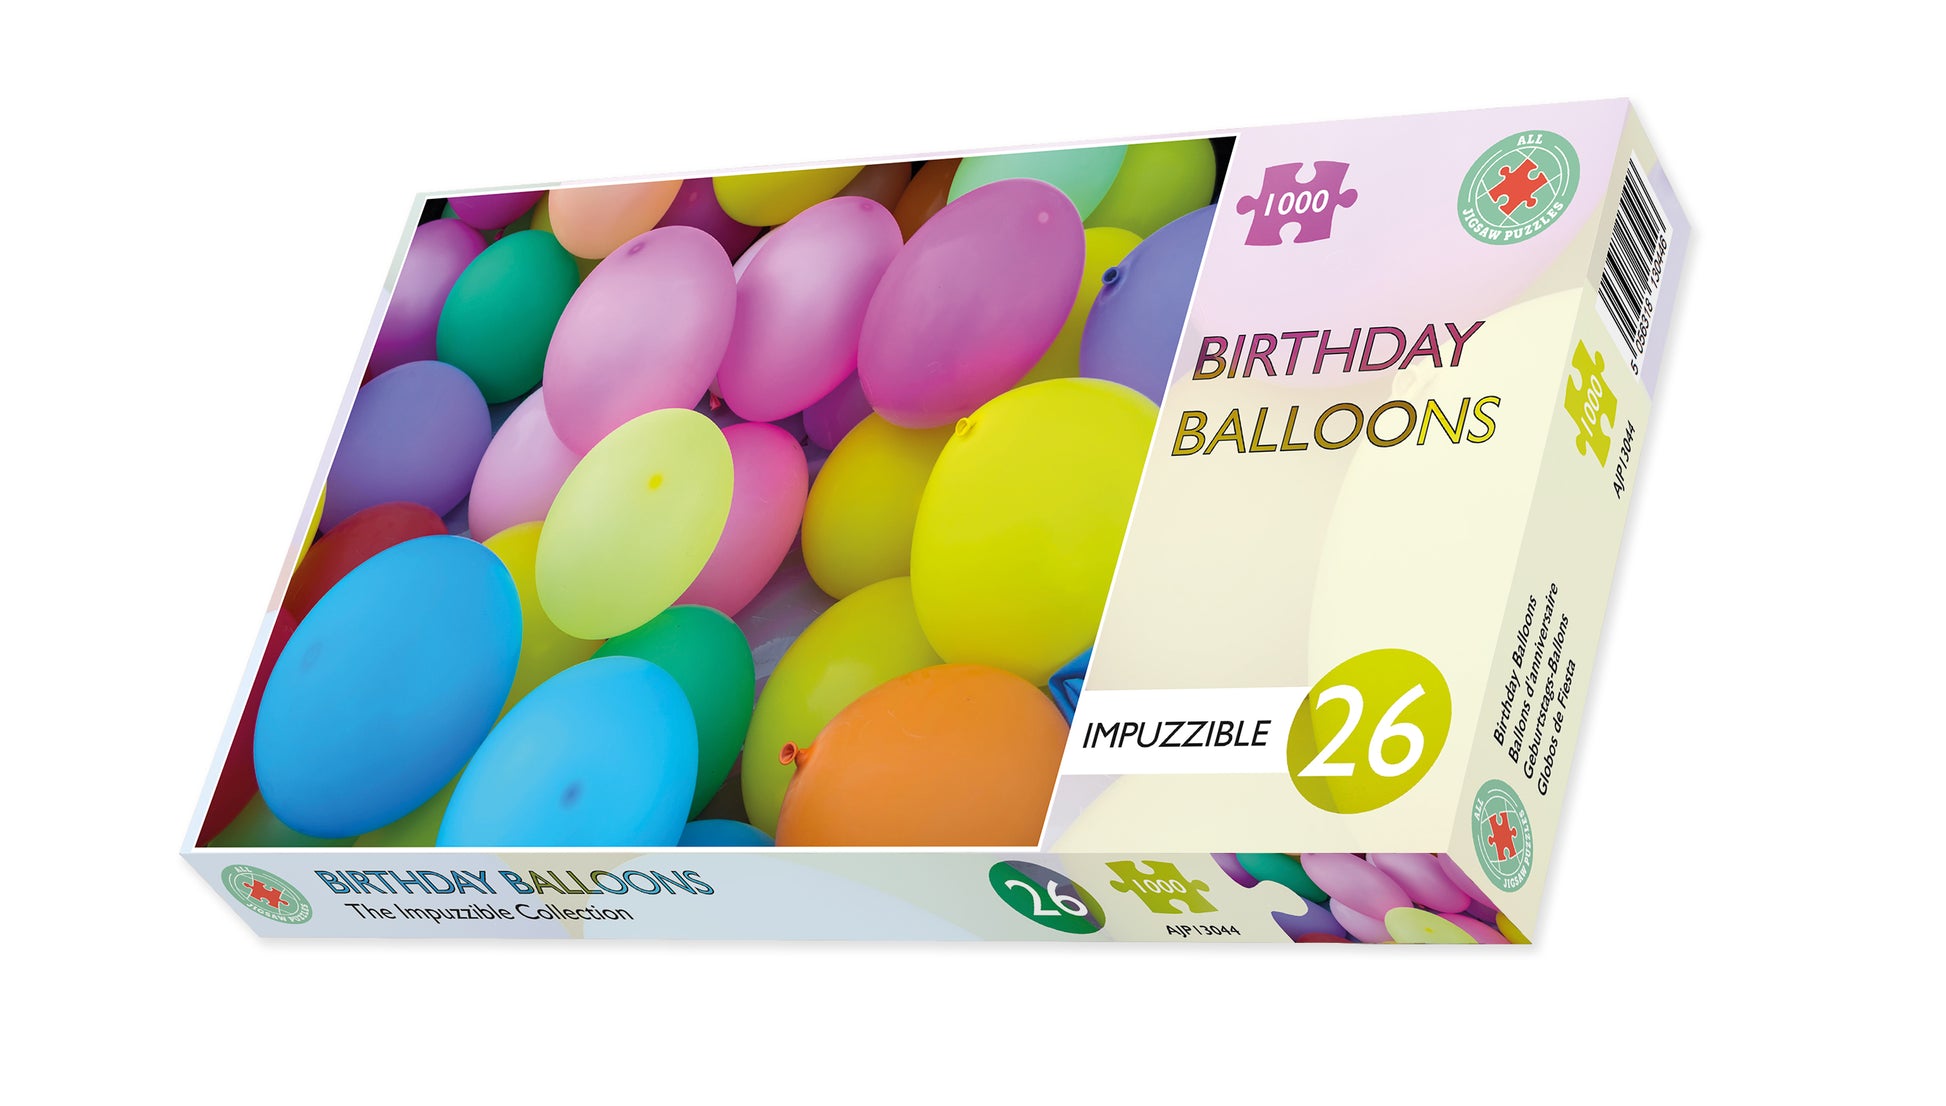 Birthday Balloons - Impuzzible No. 26 - 1000 Piece Jigsaw Puzzle box